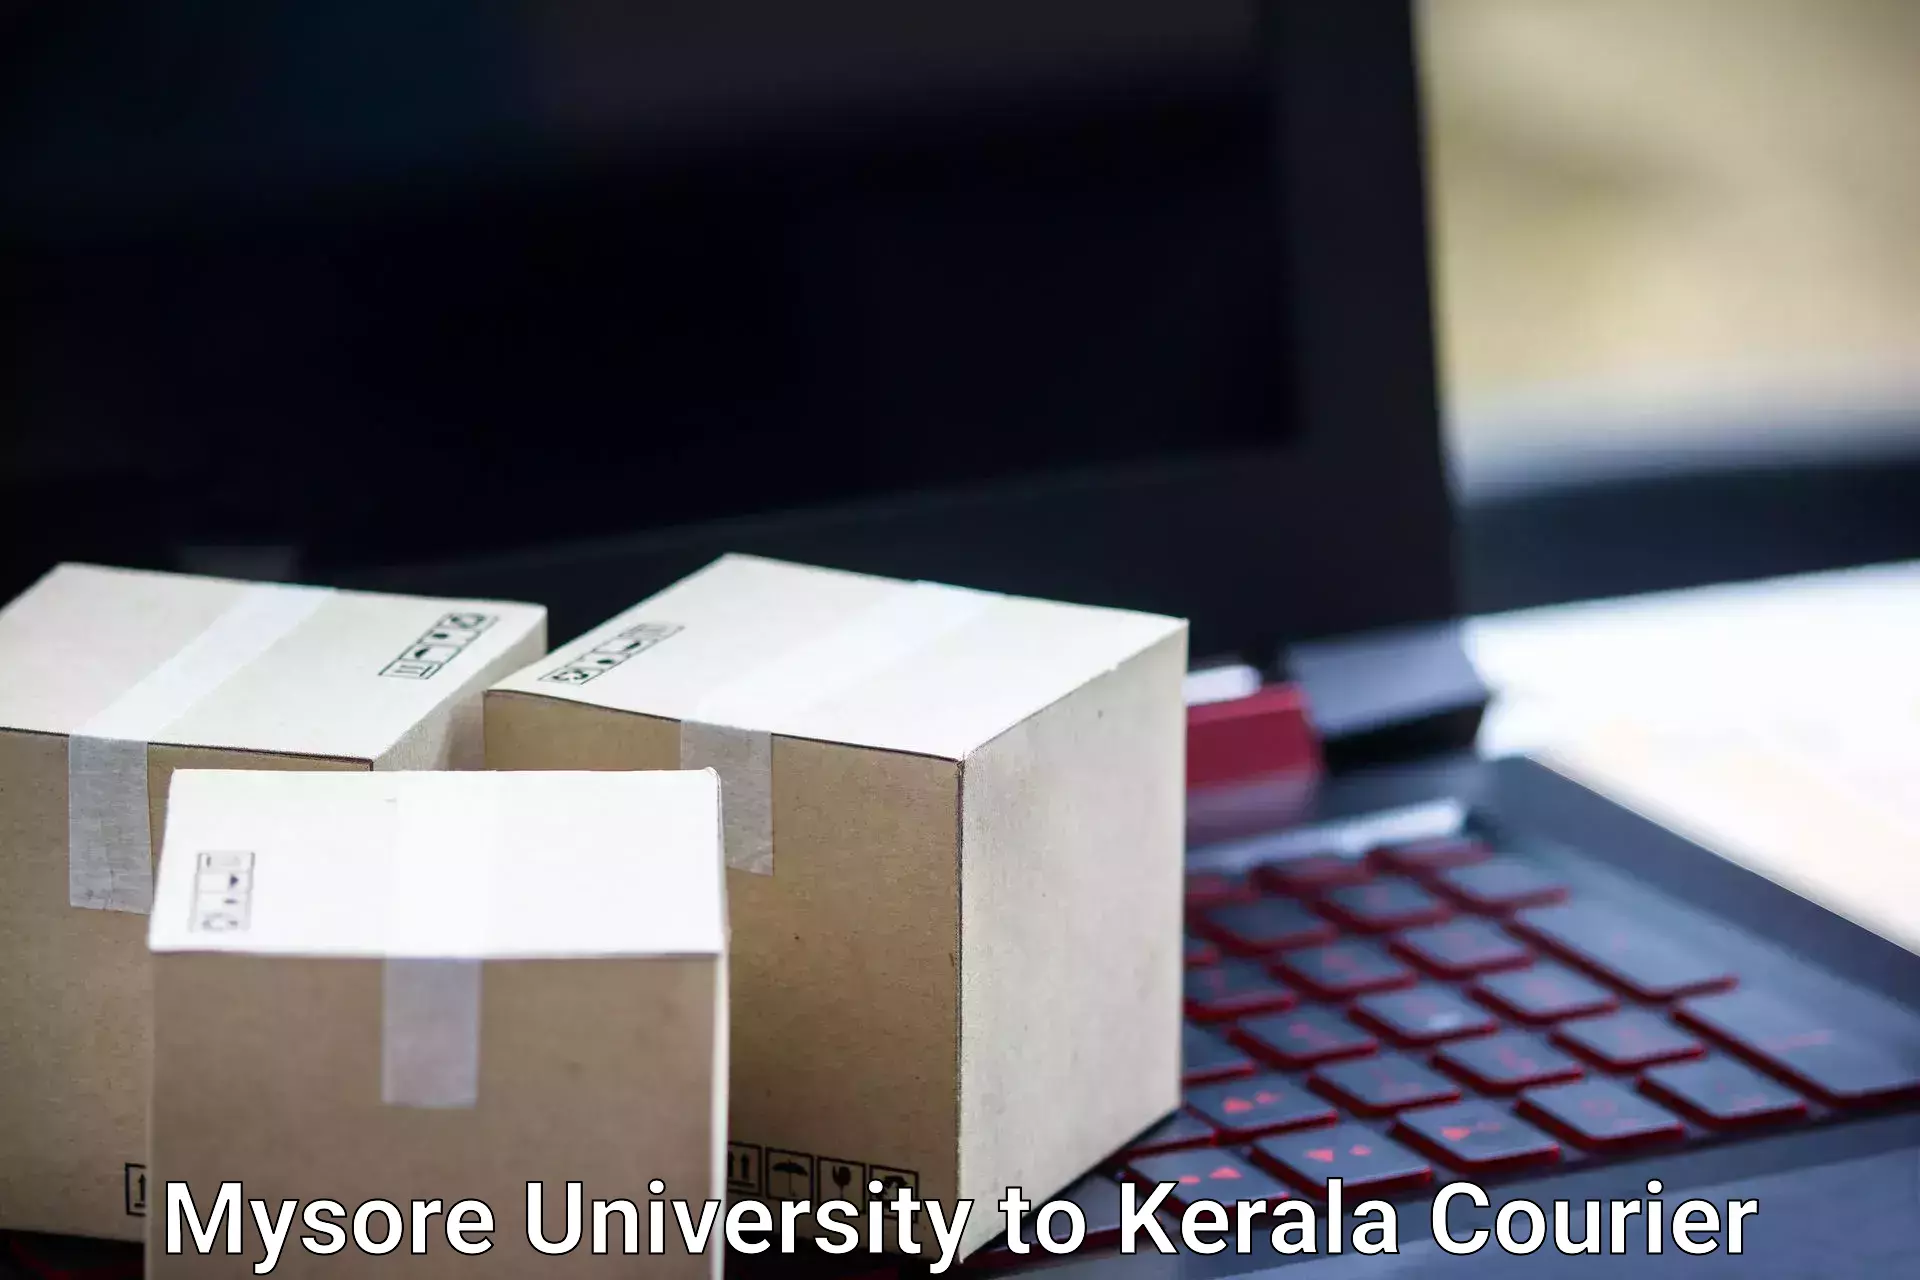 Baggage shipping service Mysore University to Kerala